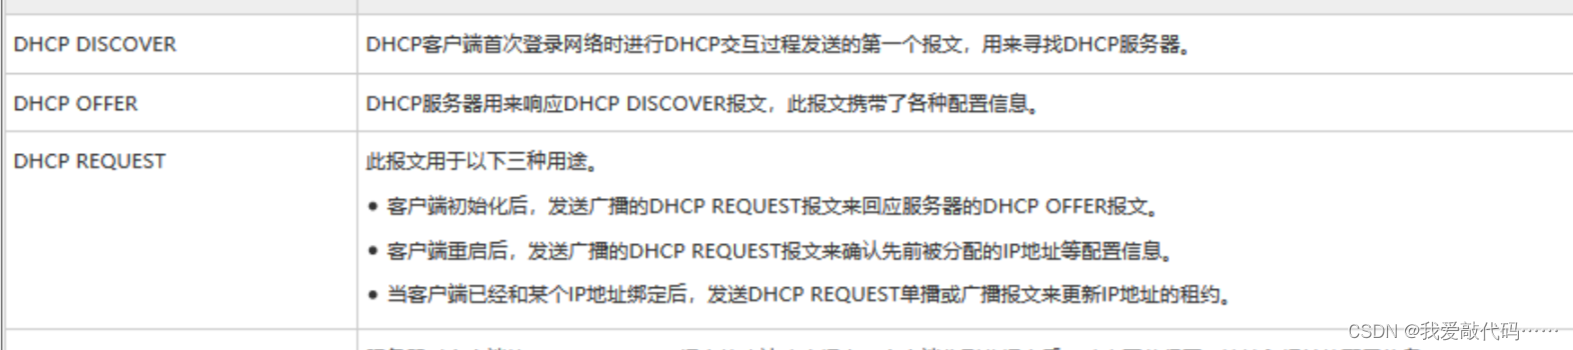 DHCP定义